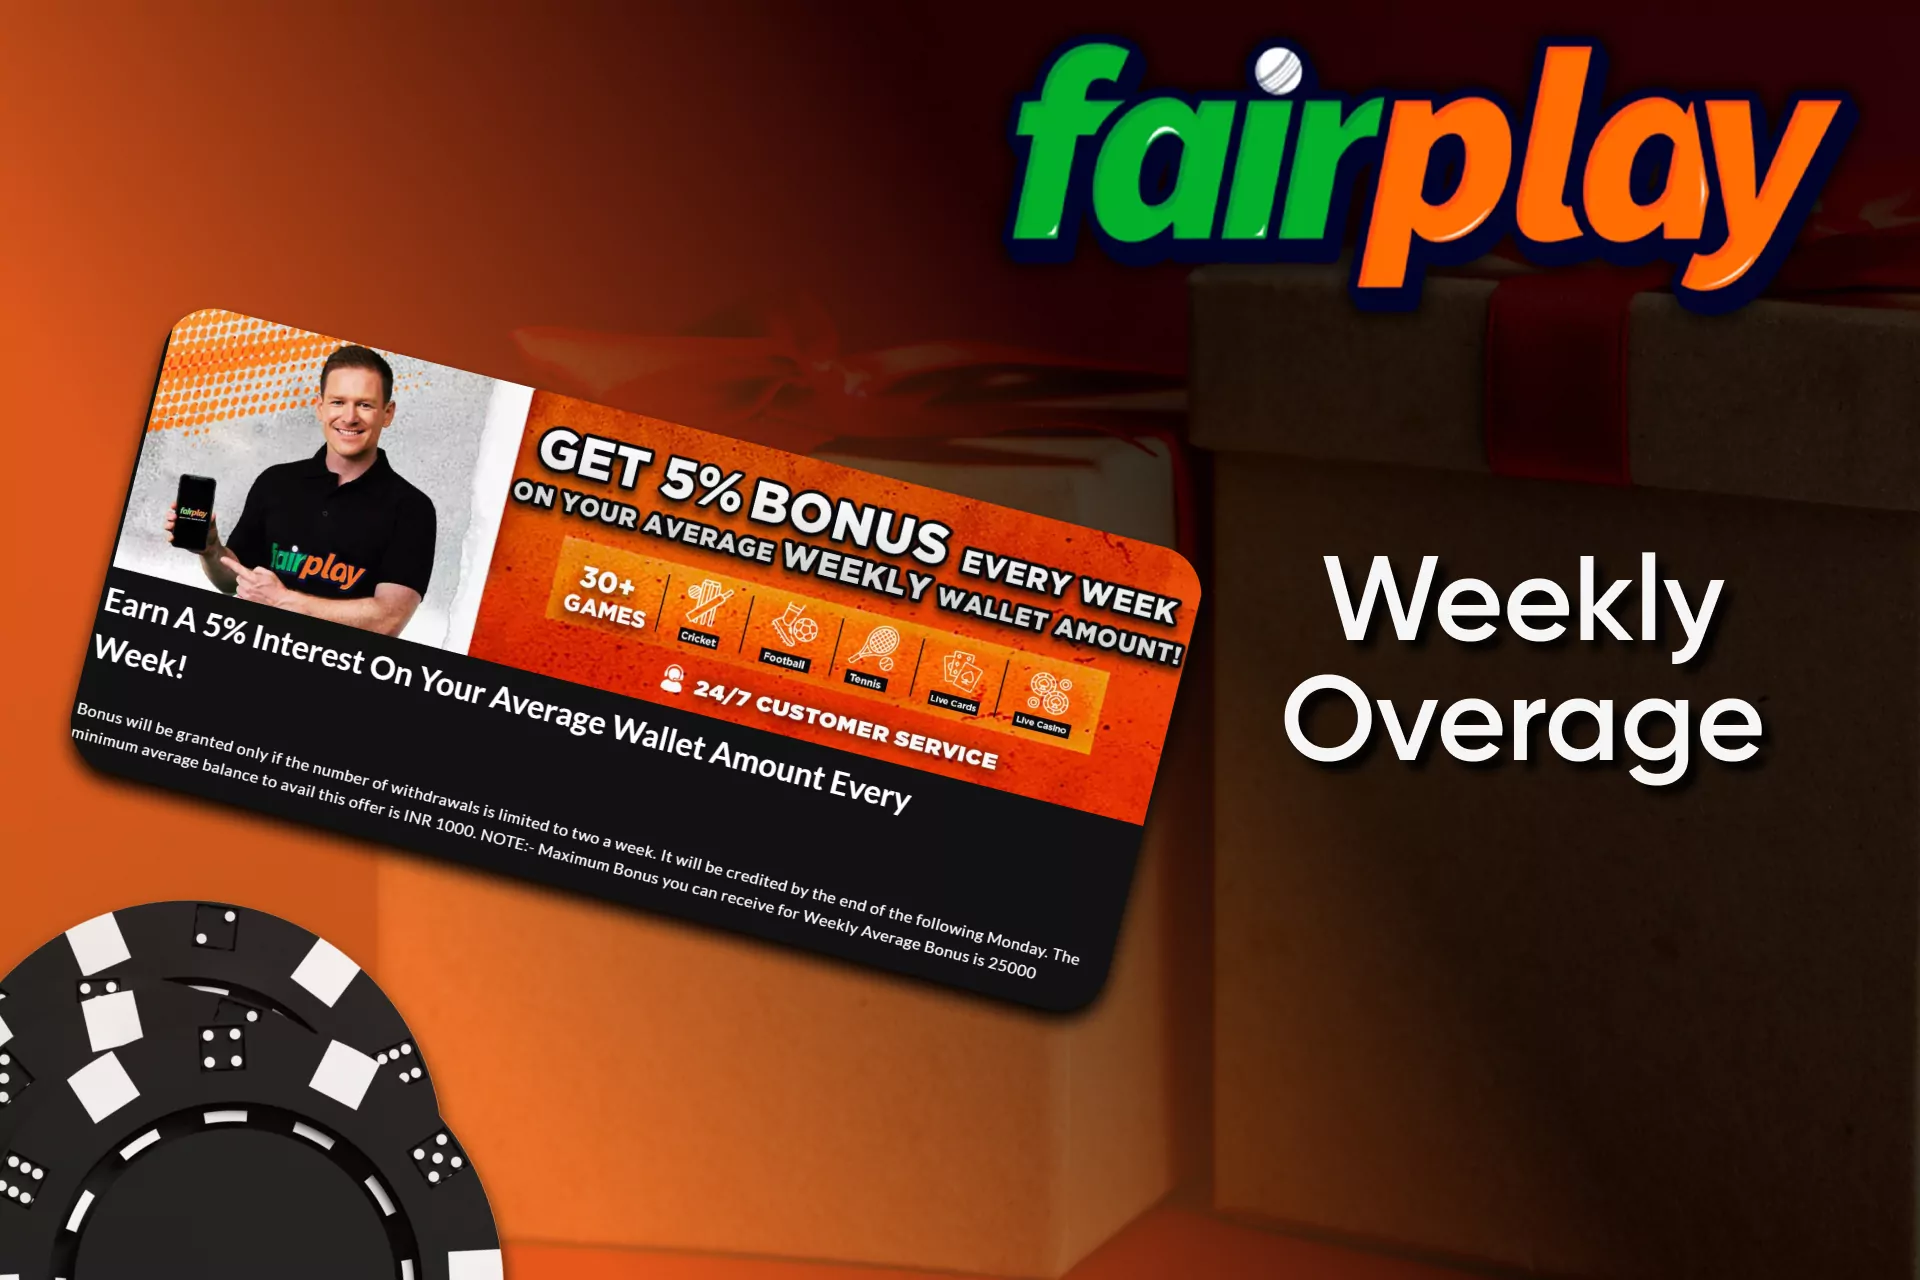 Every week, Fairplay provides a 5% bonus to customers.